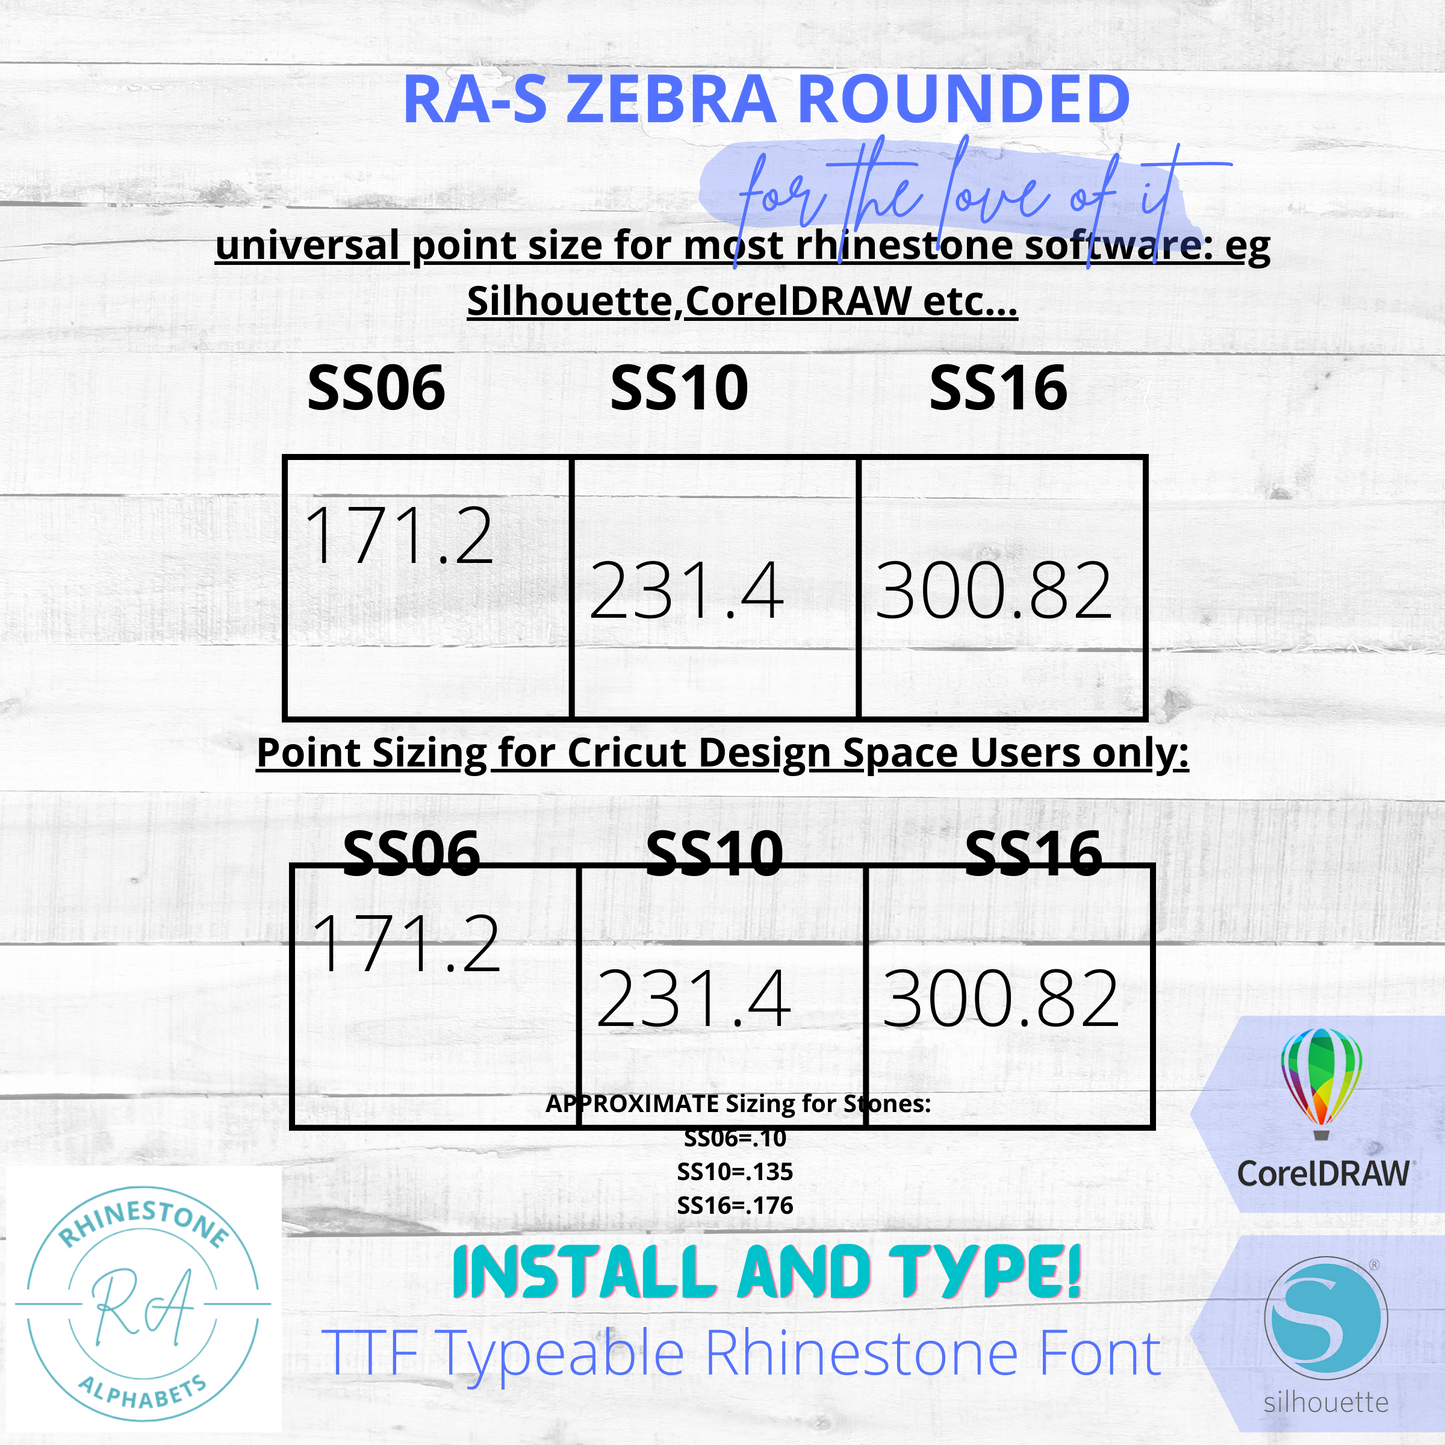 RA-S Zebra Rounded 1  A TTF Typeable Rhinestone Zebra font 2 colors